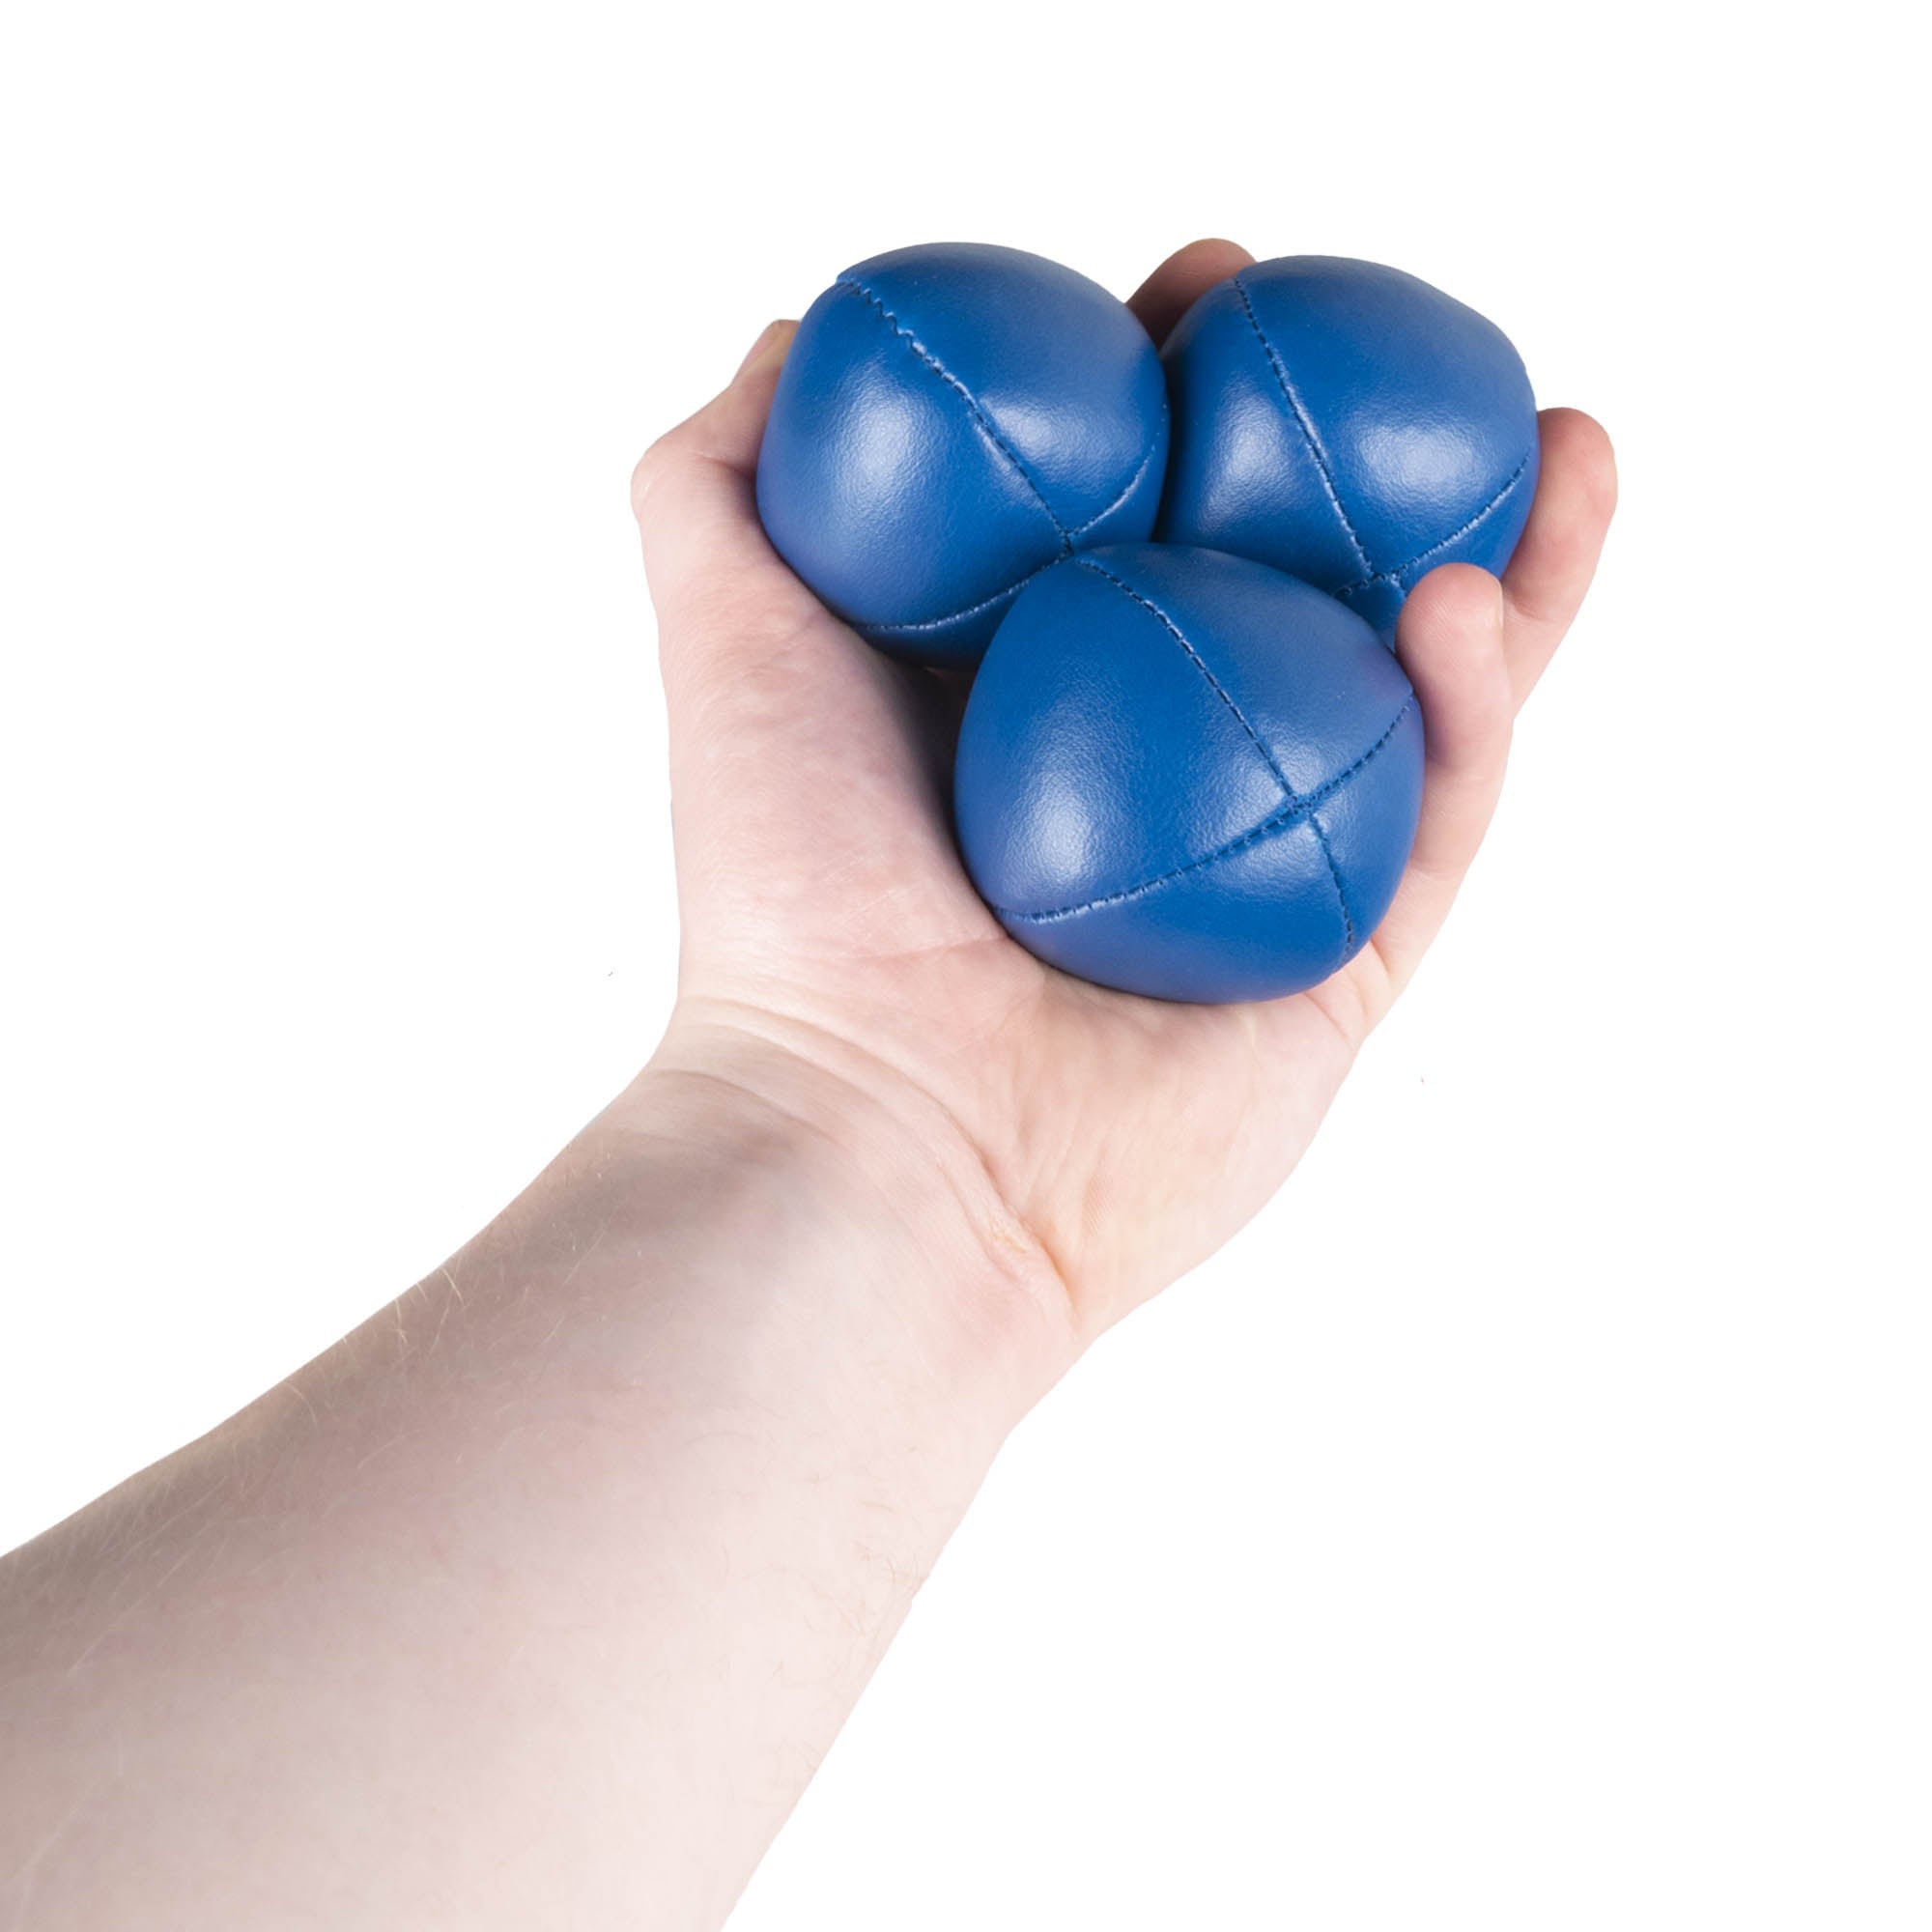 3 blue balls in hand